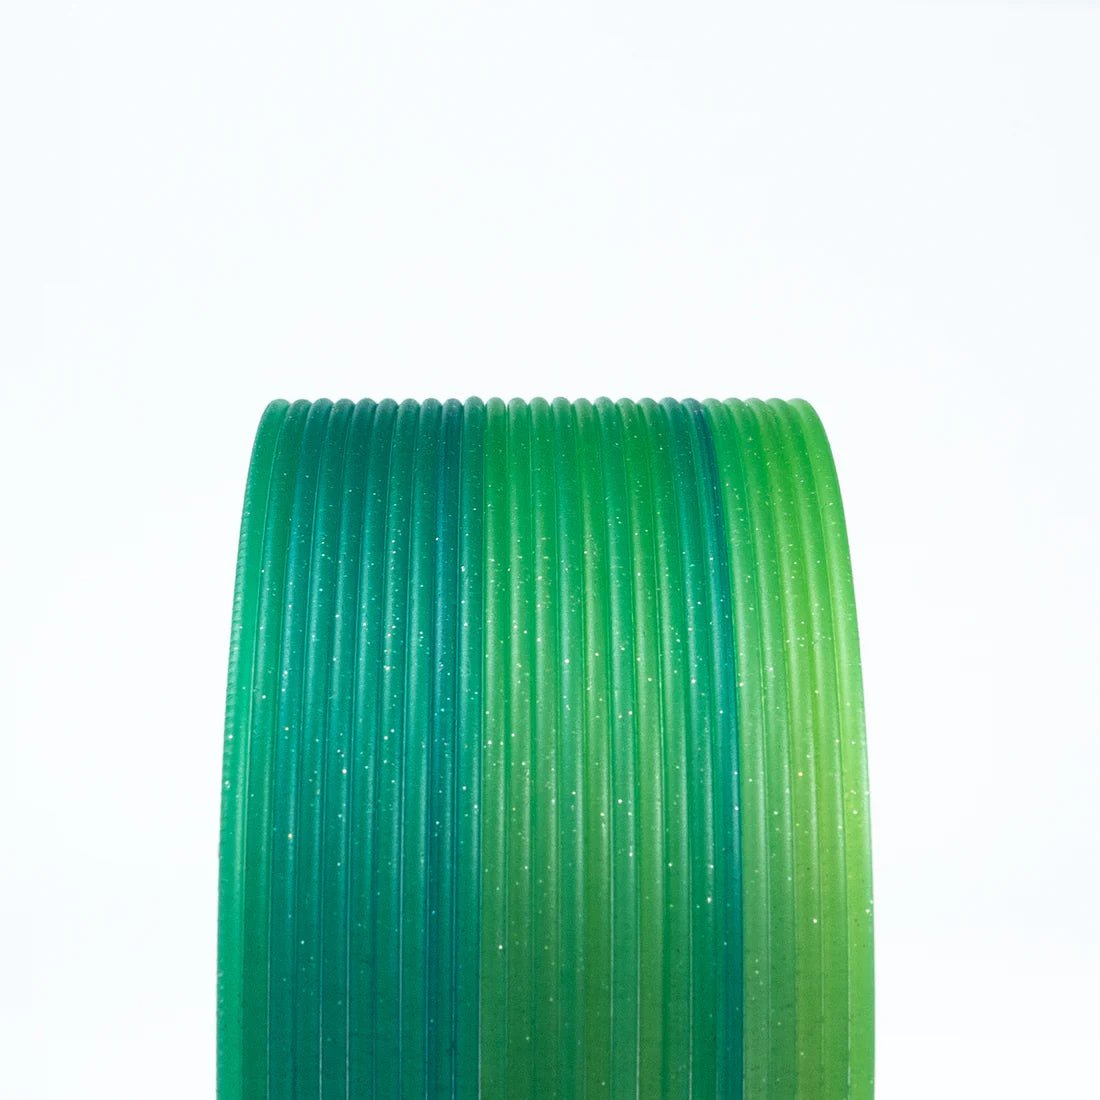 ProtoPasta Forest Fantasy Green Multicolor HTPLA (500g) - West3D Printing - ProtoPasta